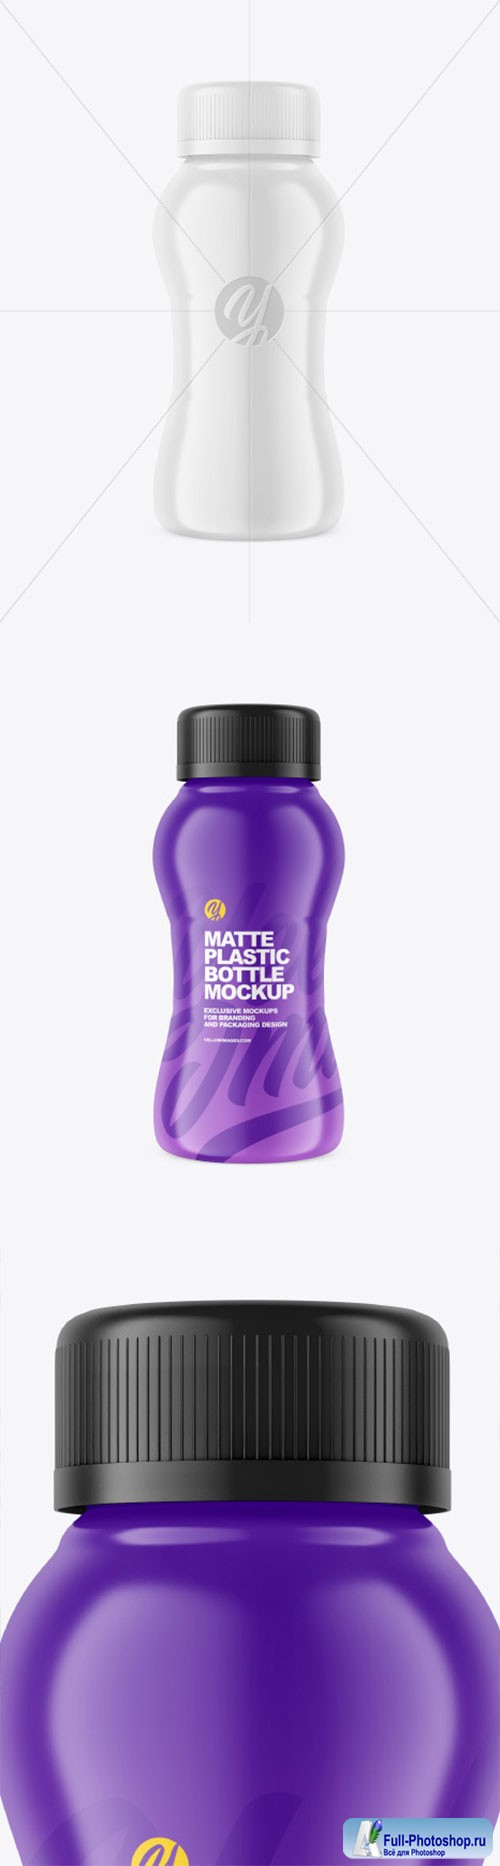  Matte Plastic Bottle Mockup 86612